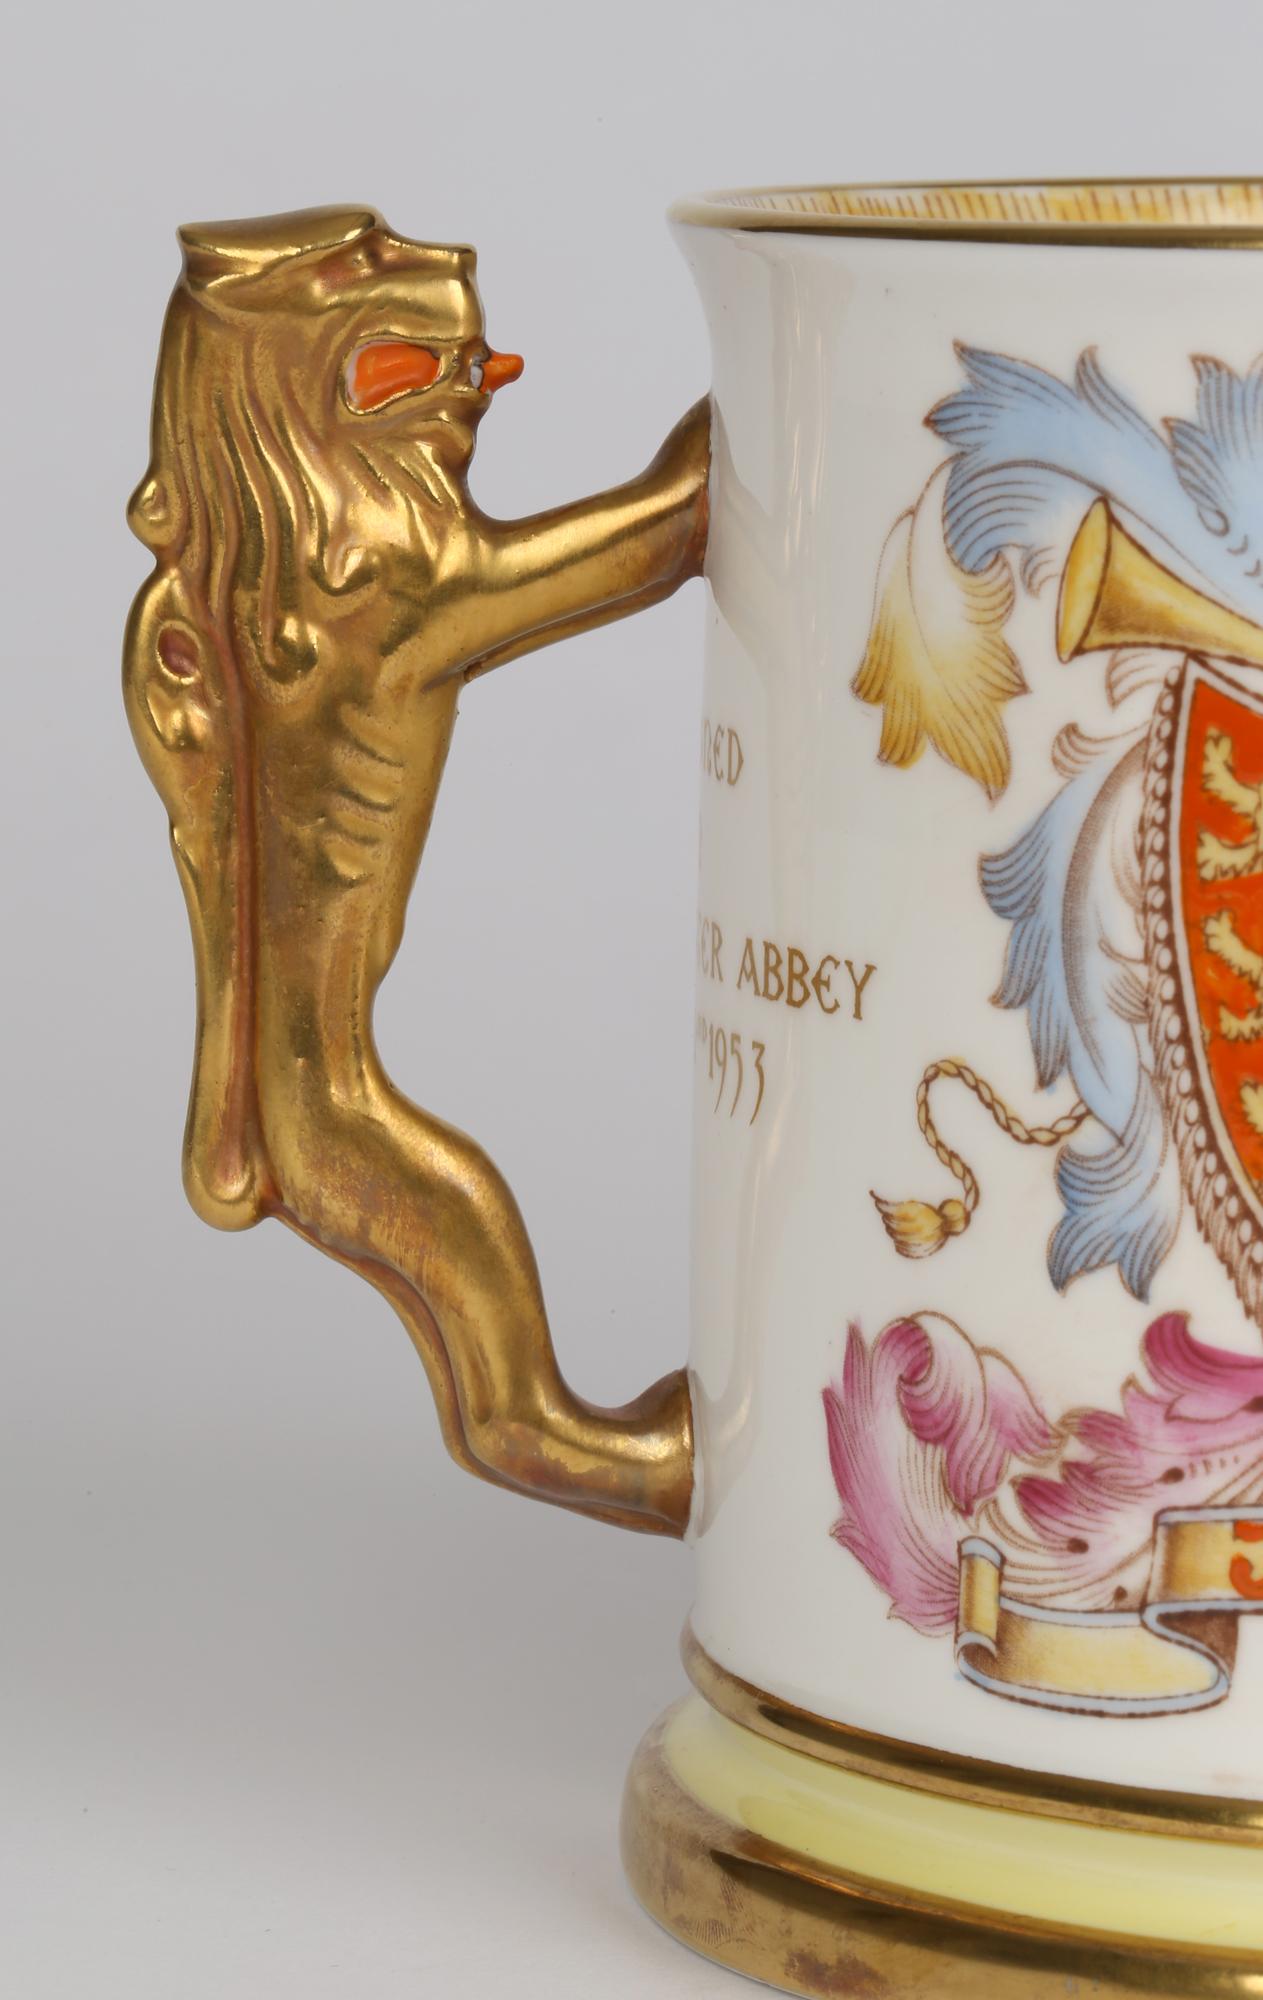 Paragon Ltd Edn Porcelain Tyg Commemorating Coronation of Queen Elizabeth II 195 4